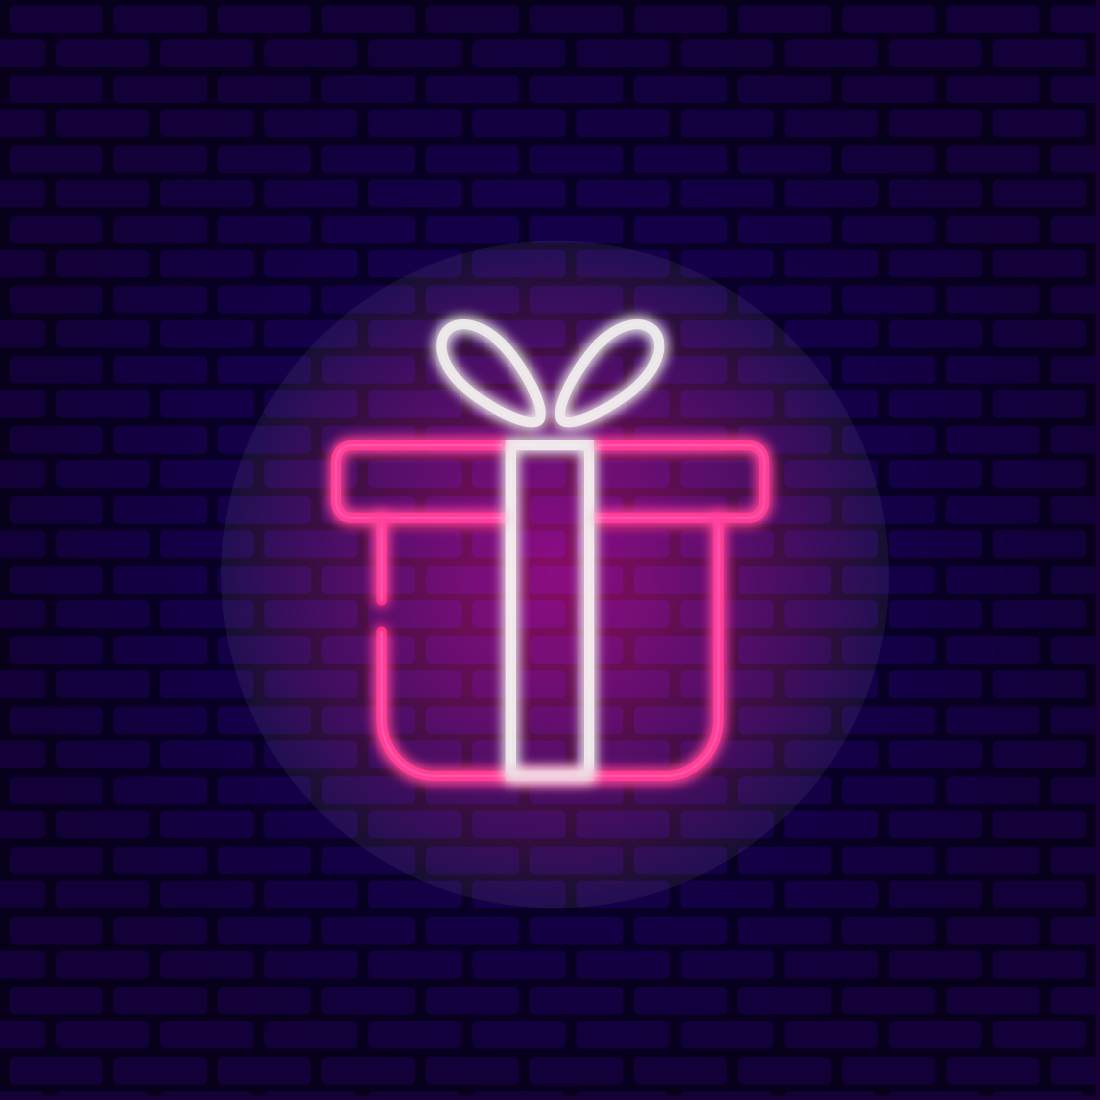 Neon Christmas Gift preview image.